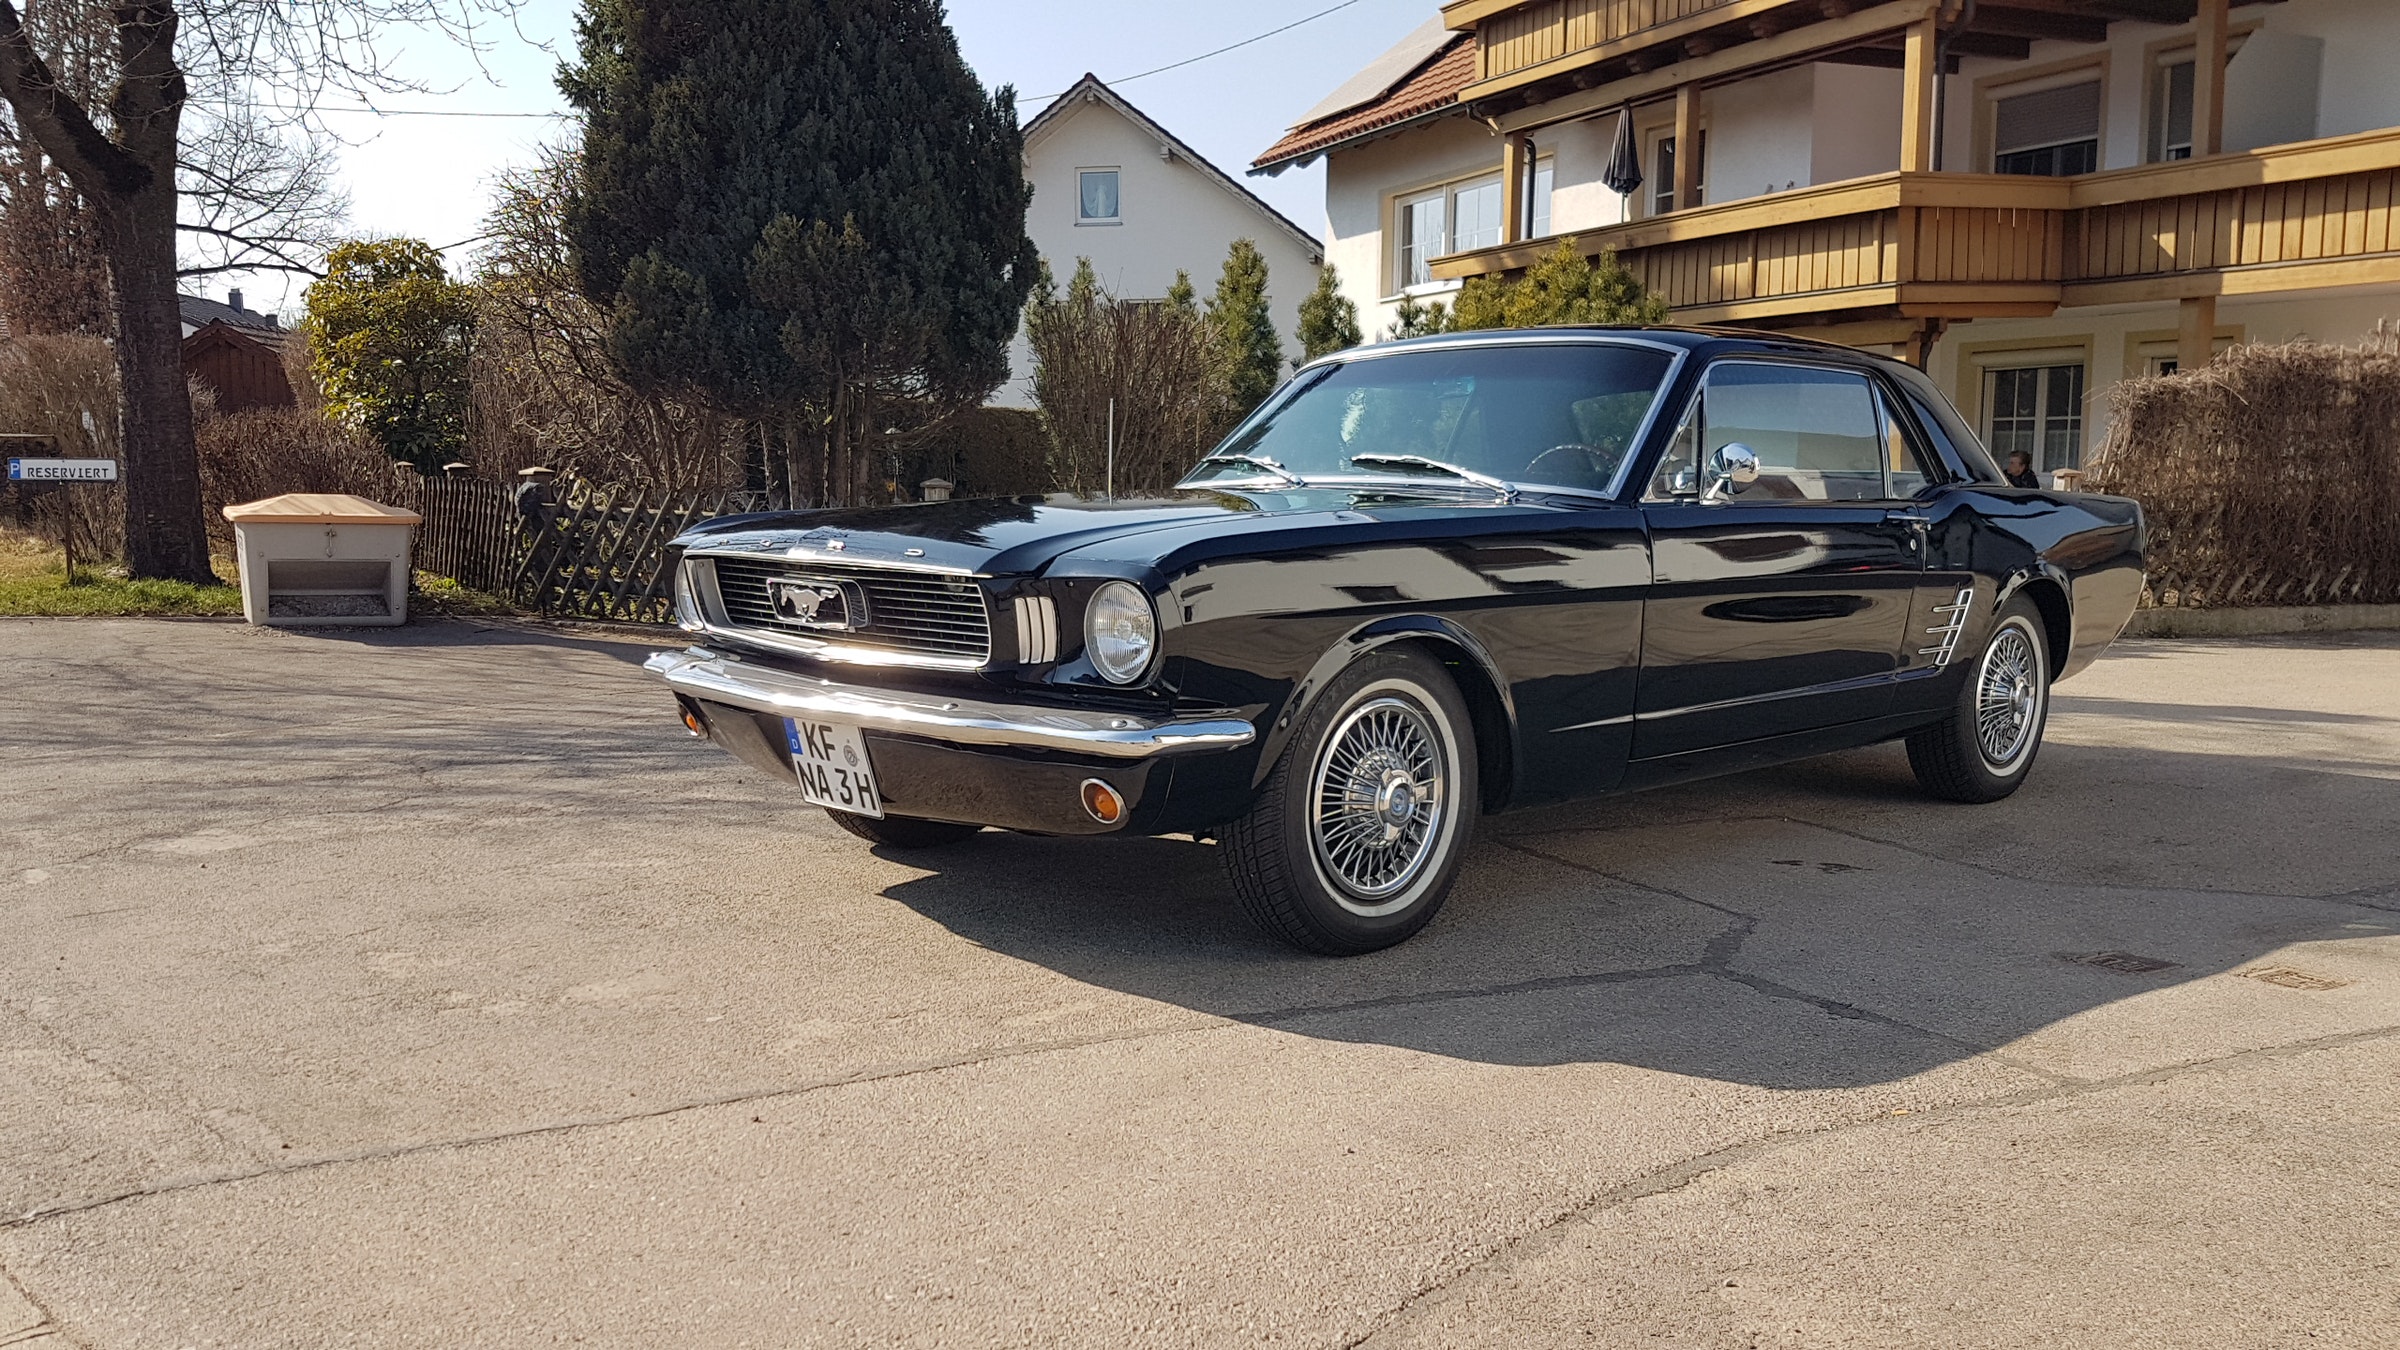 Ford Mustang Baujahr 1965 - 1969 mieten im Raum Kempten